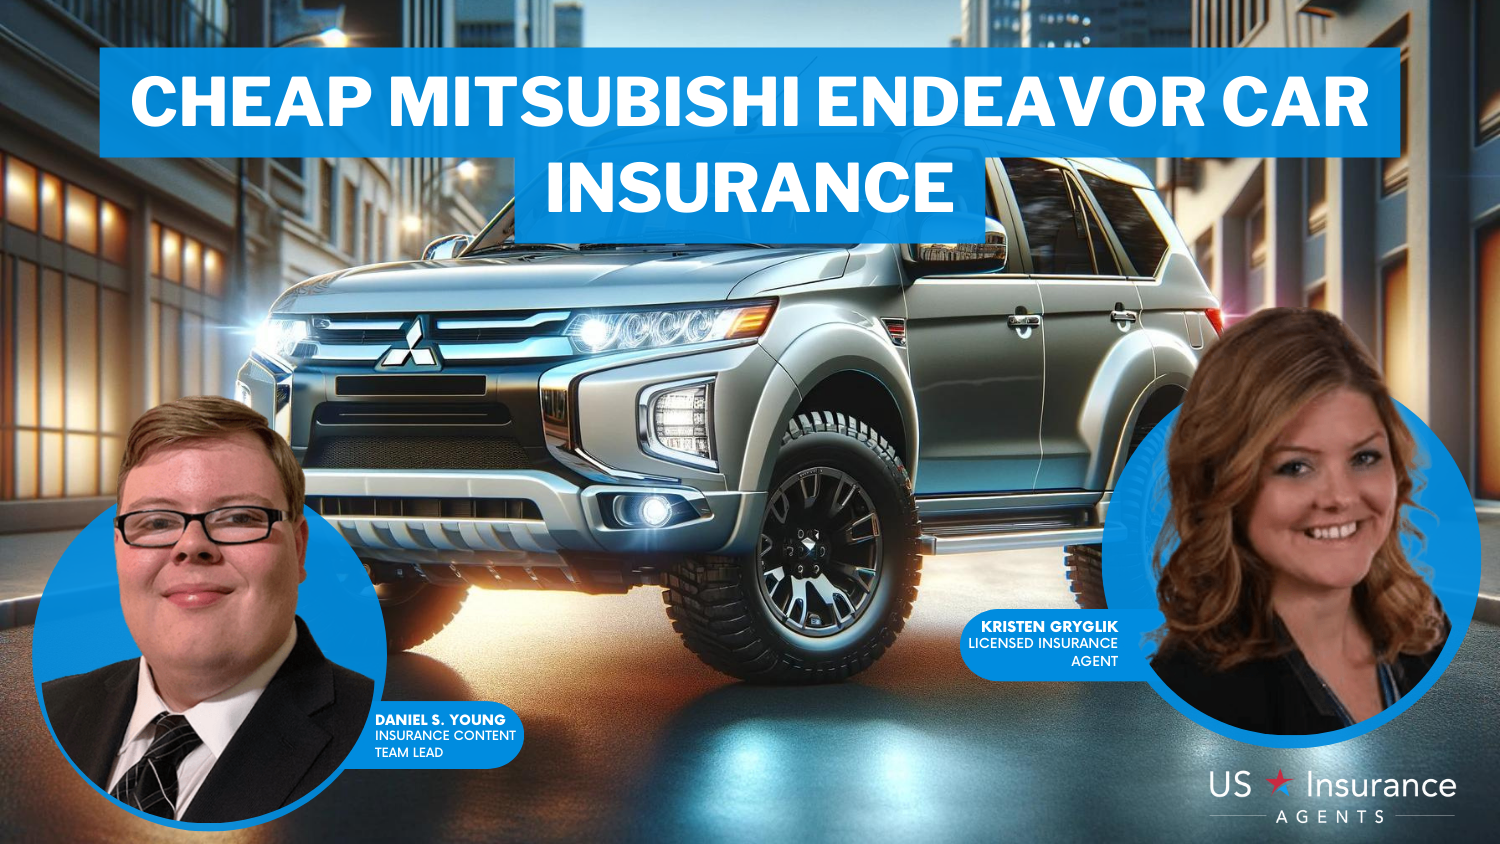 Progressive, USAA, and The General: Cheap Mitsubishi Endeavor car insurance